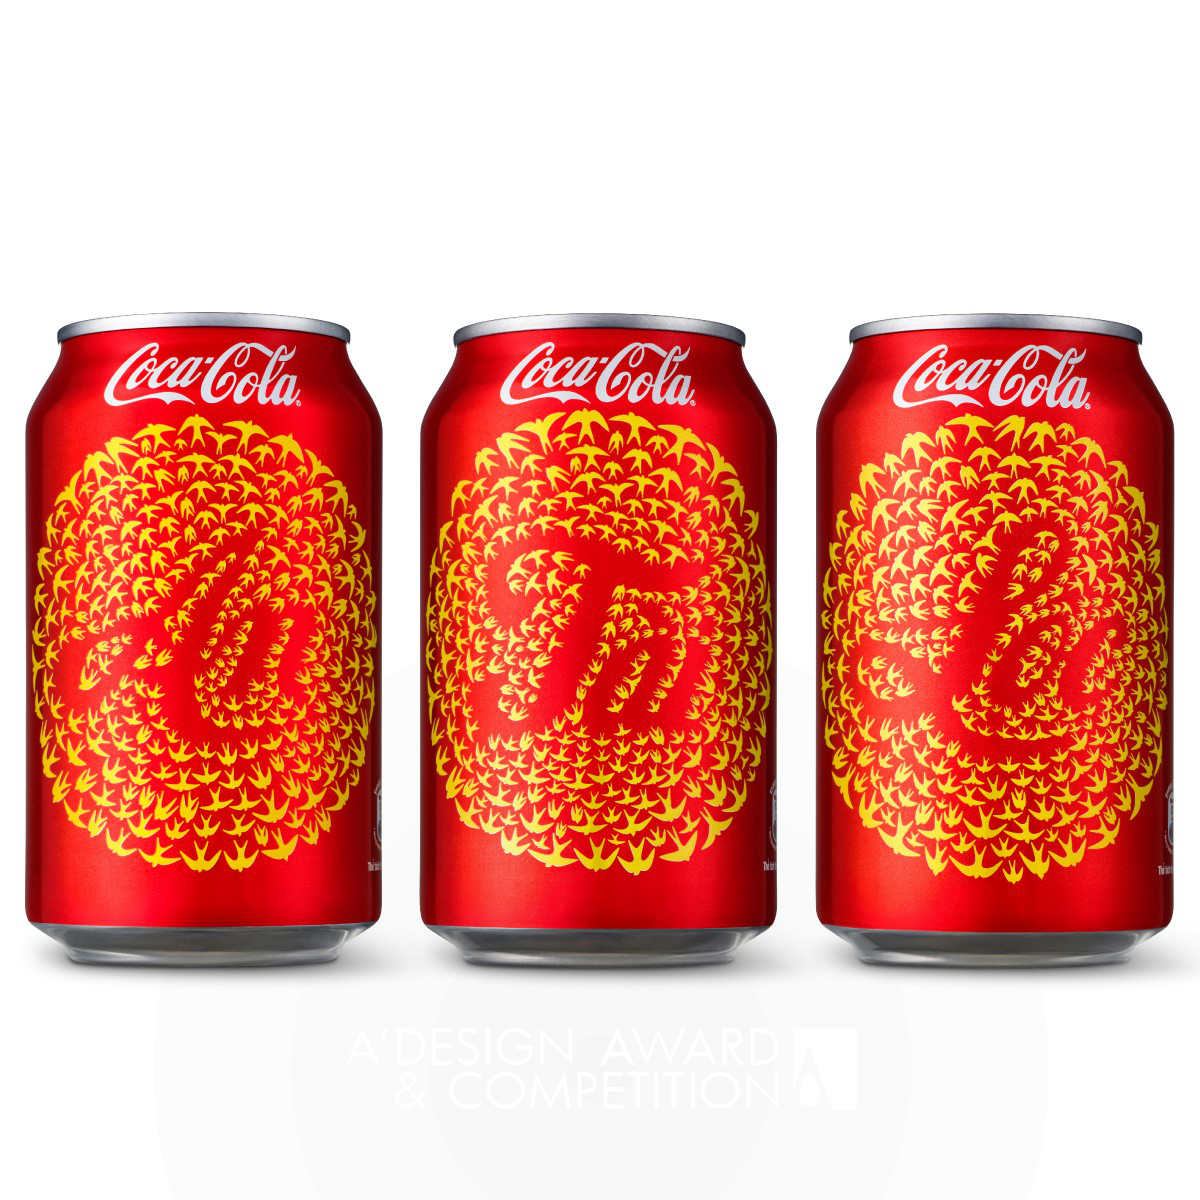 Coca-Cola Tet 2014 Soft drink packaging